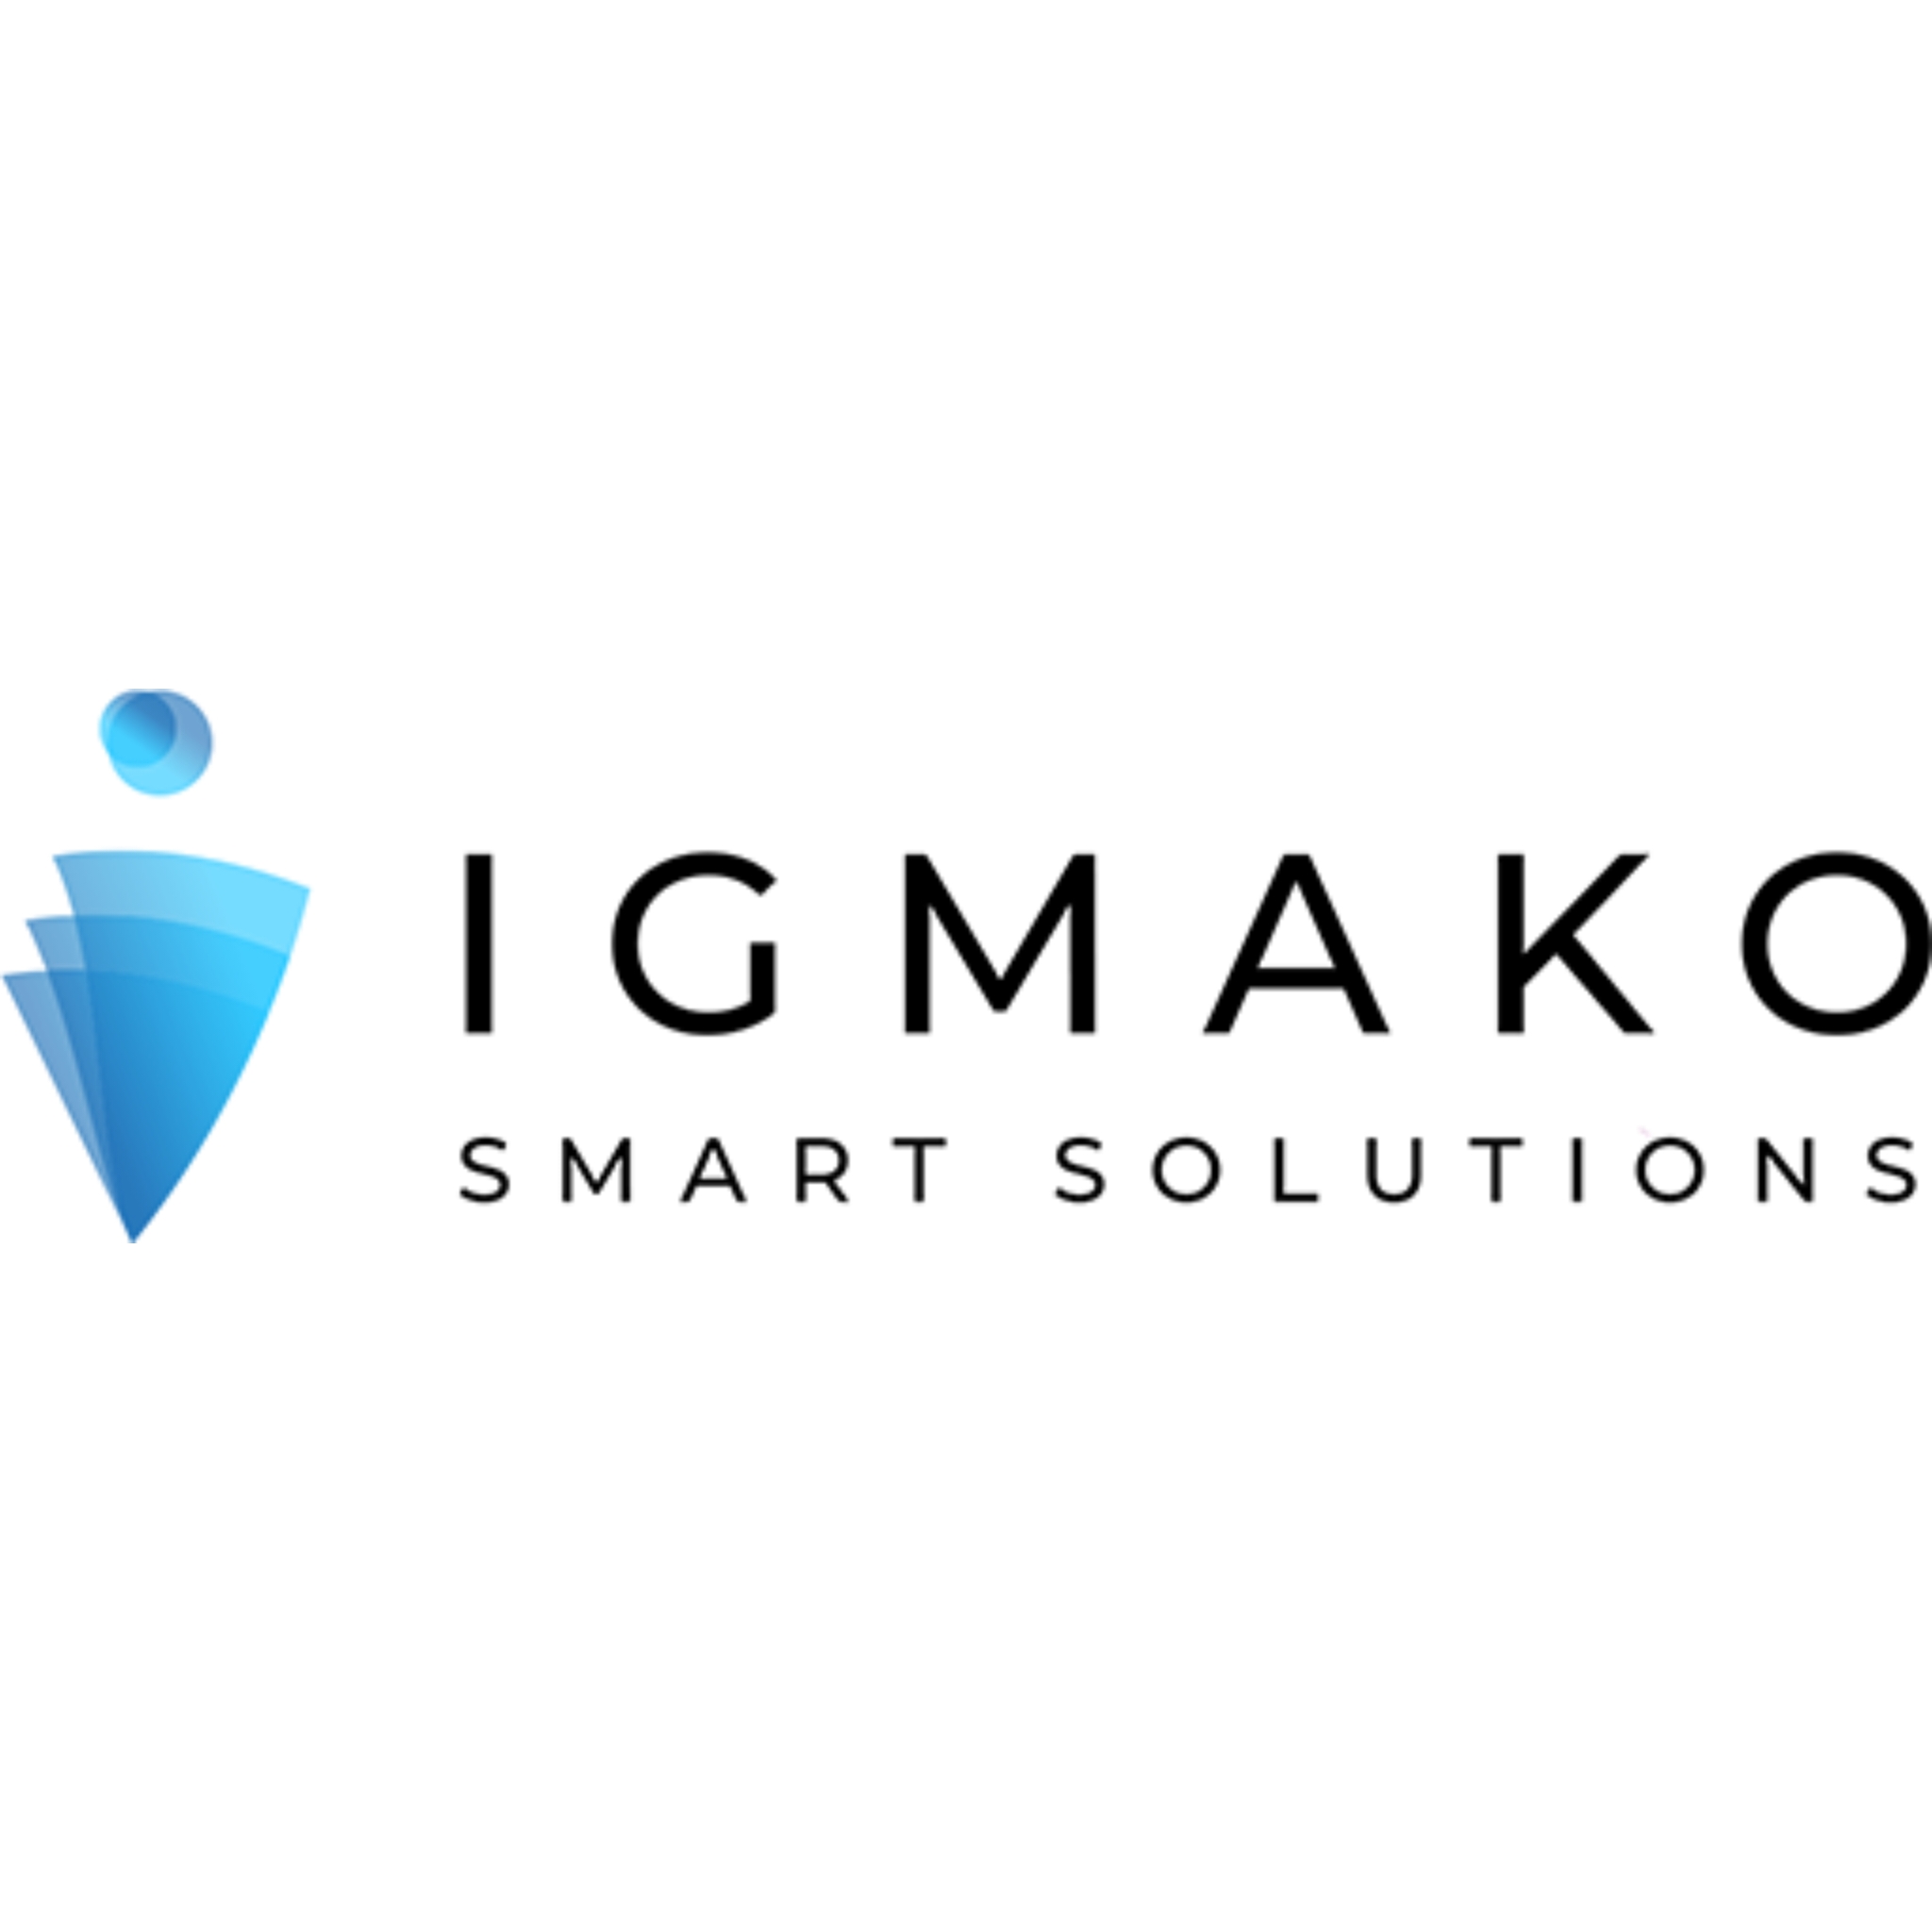 Igmako Smart Solutions